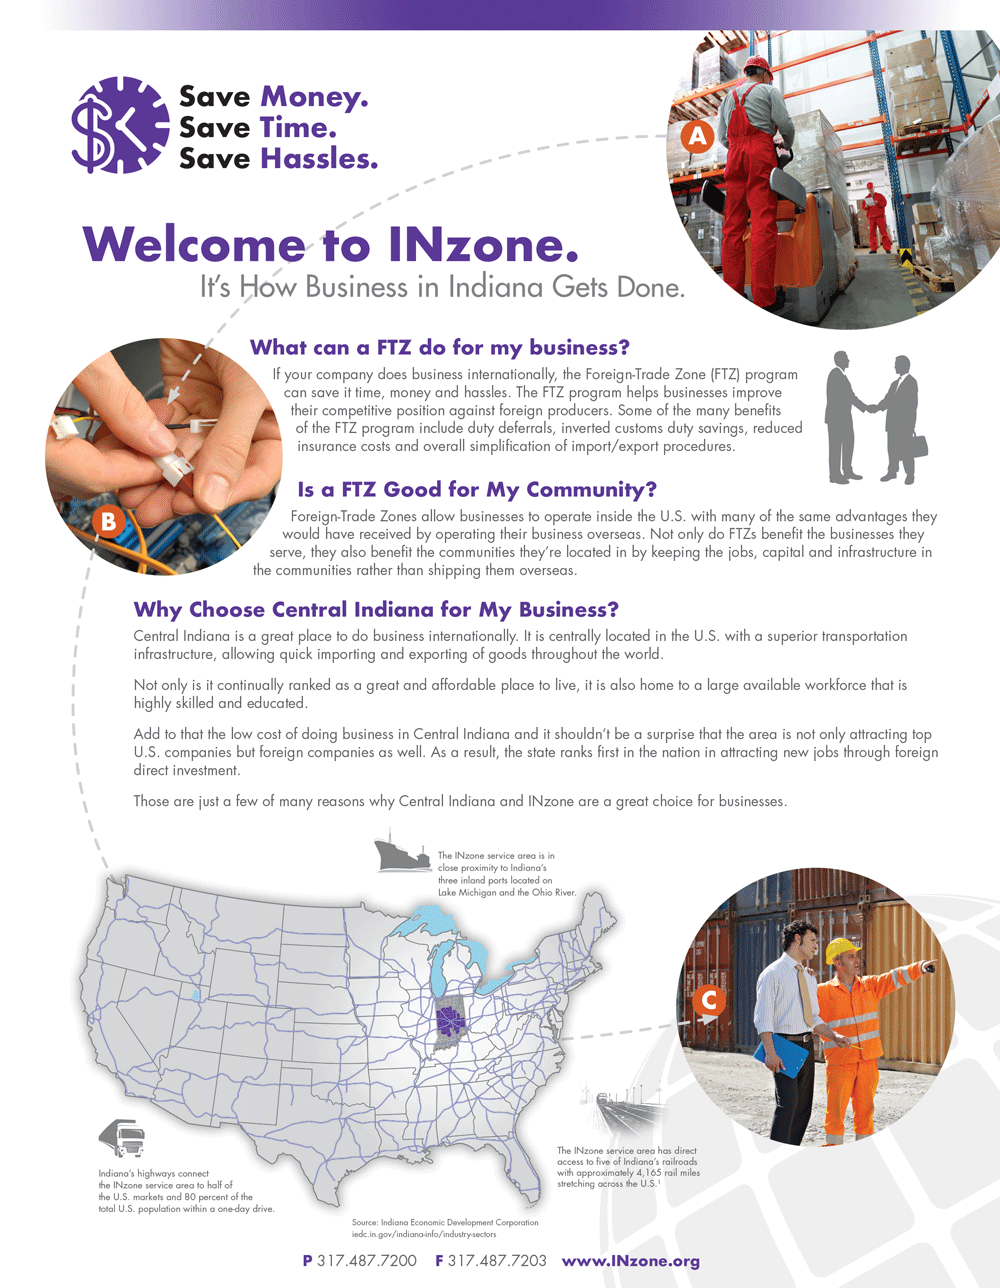 INzone Overview image